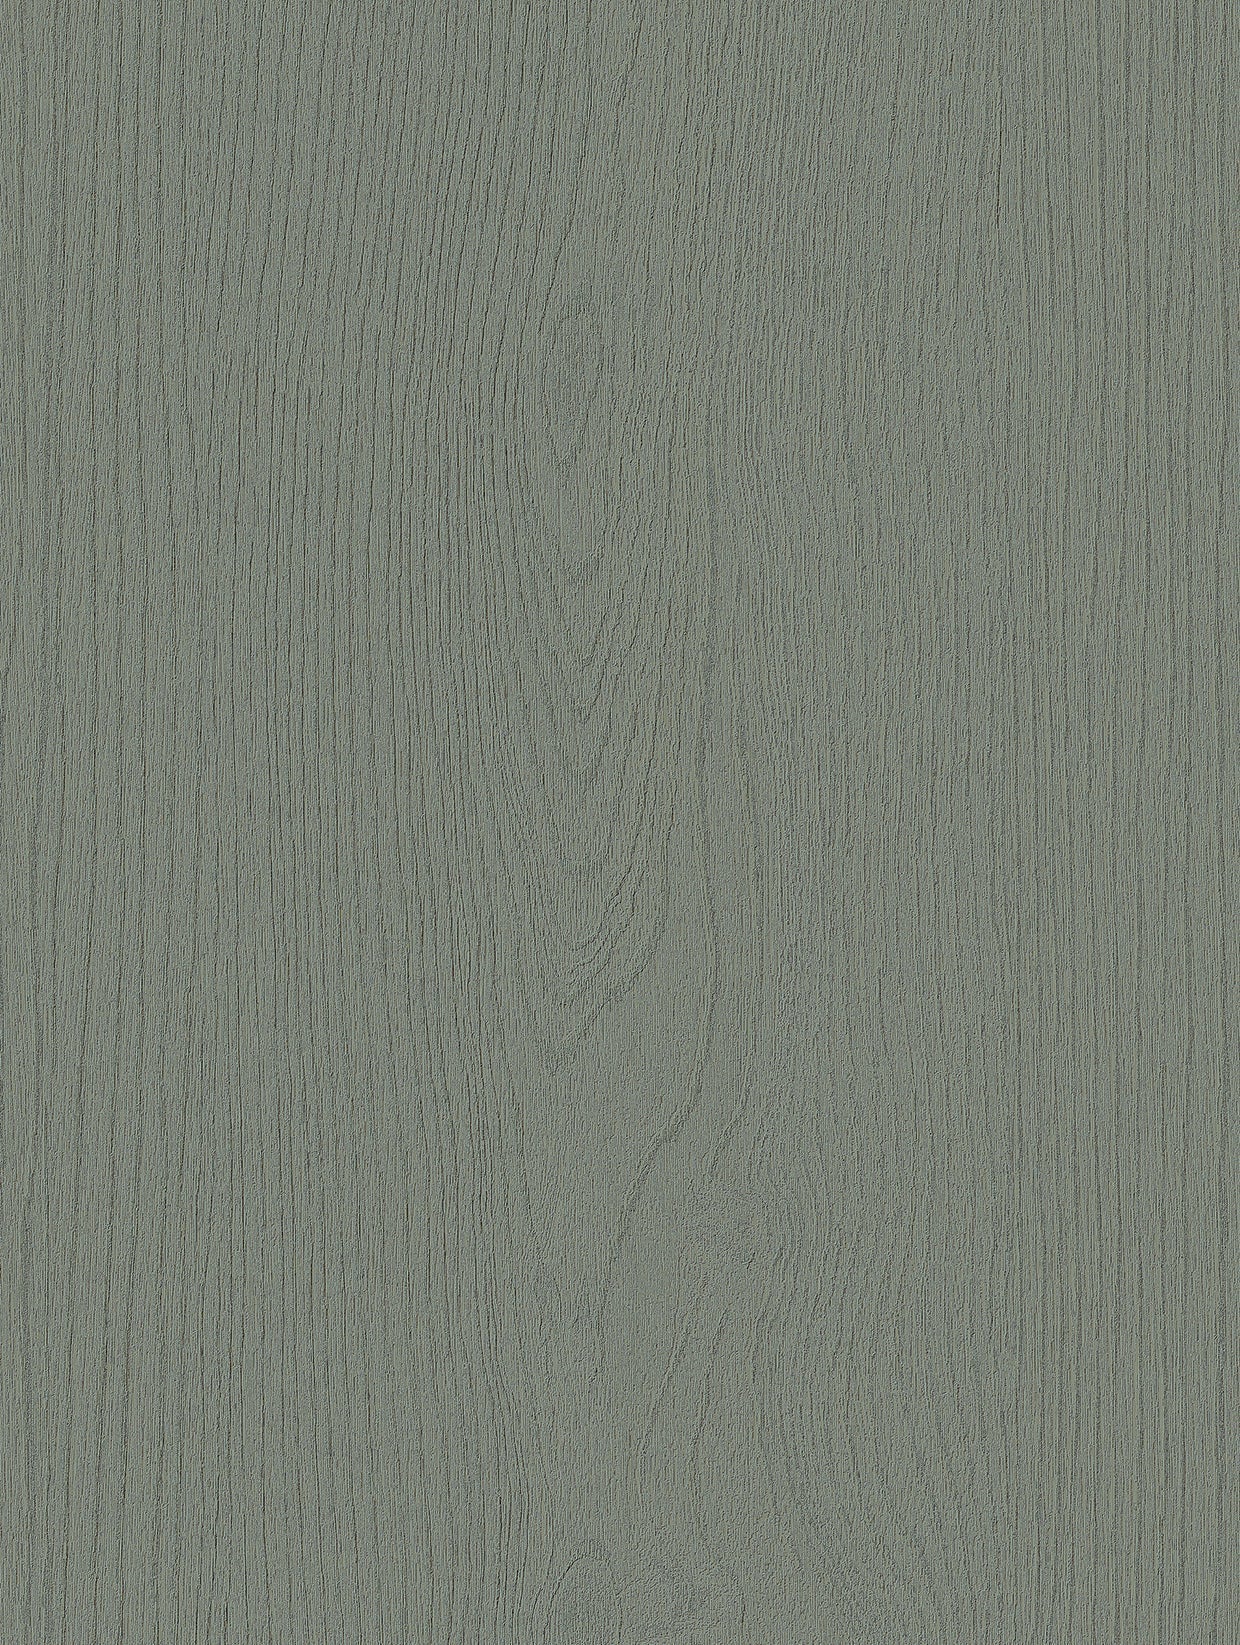 Wood - Painted Prestige | Holzdekor Lackiert Strukturiert Musterfolie A5